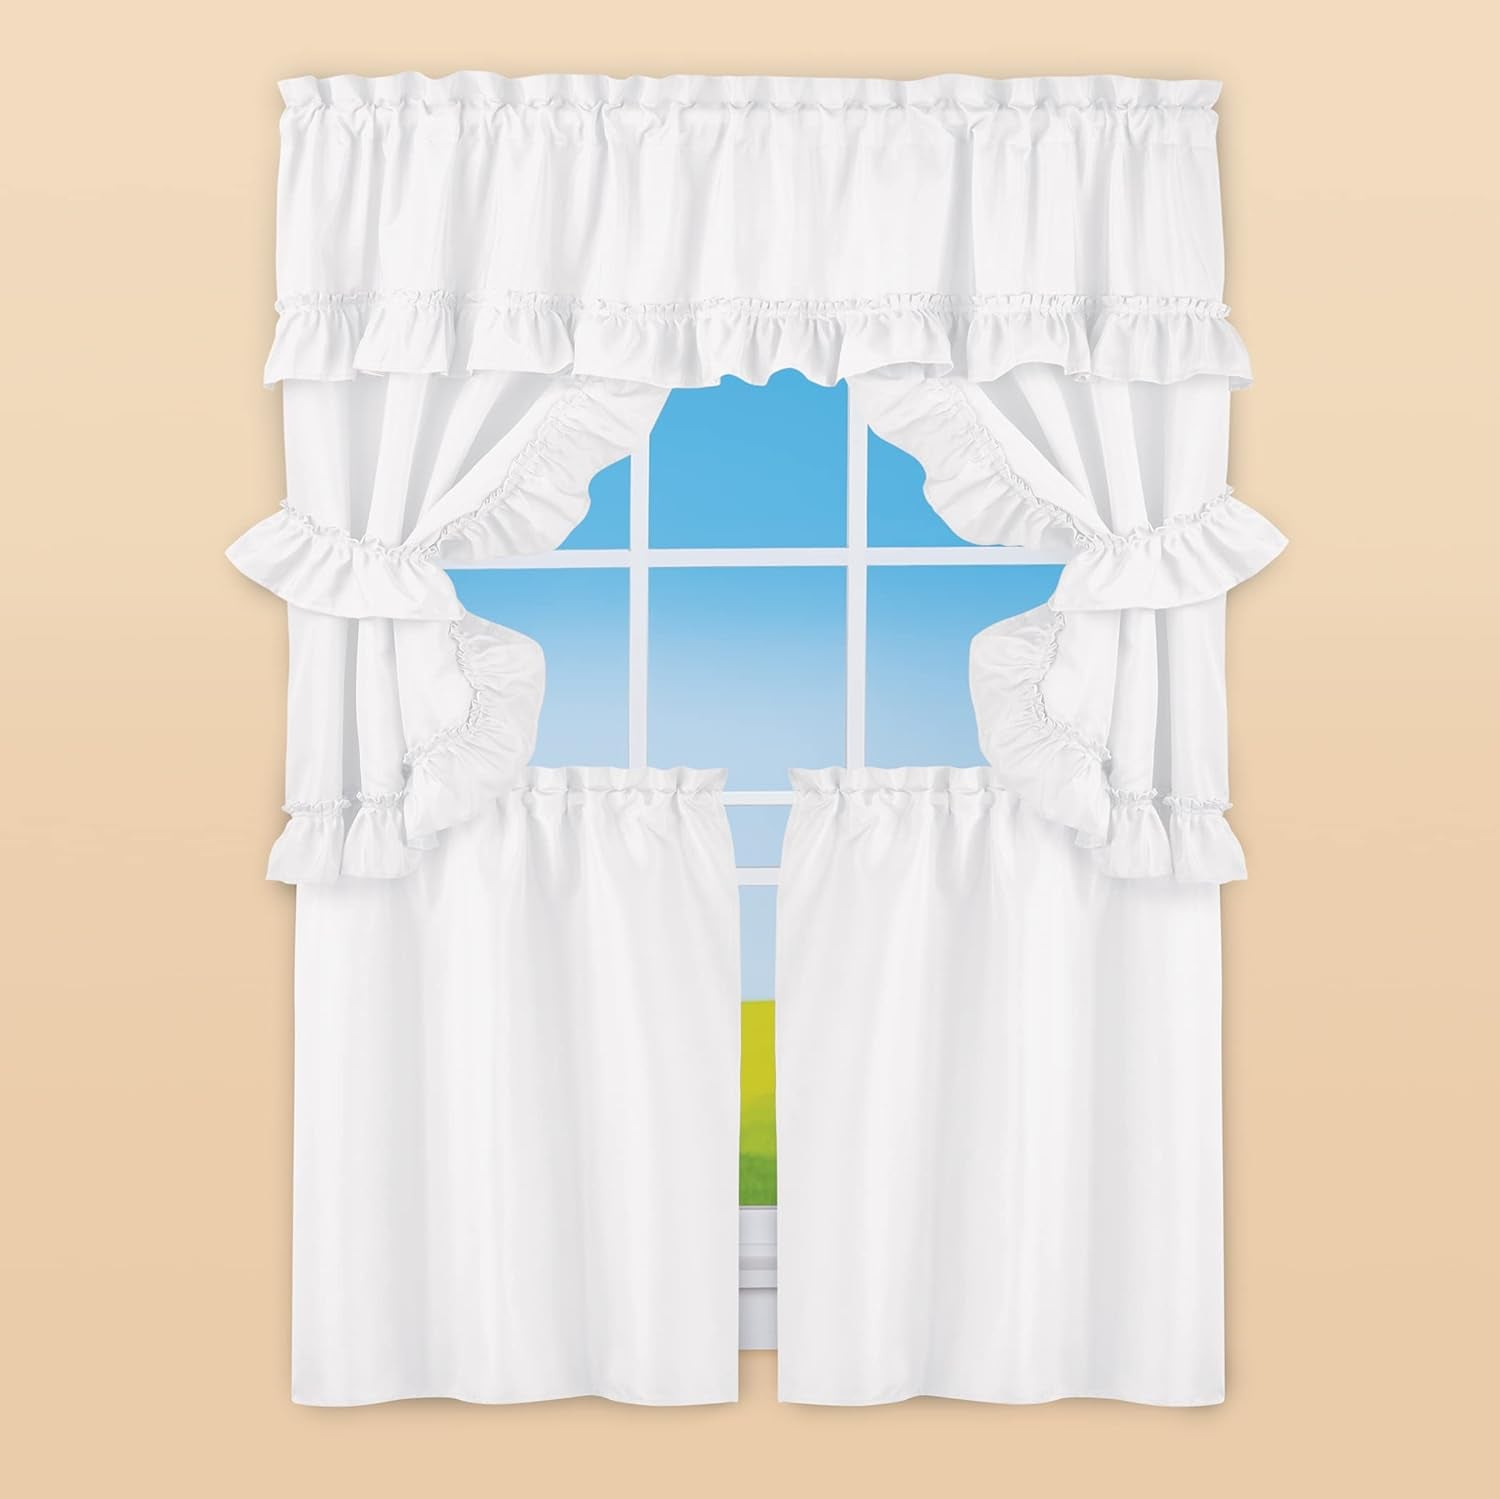 Collections Etc 5-Piece Ruffled Trim Tiers & Panels Window Curtain Set  Winston Brands   